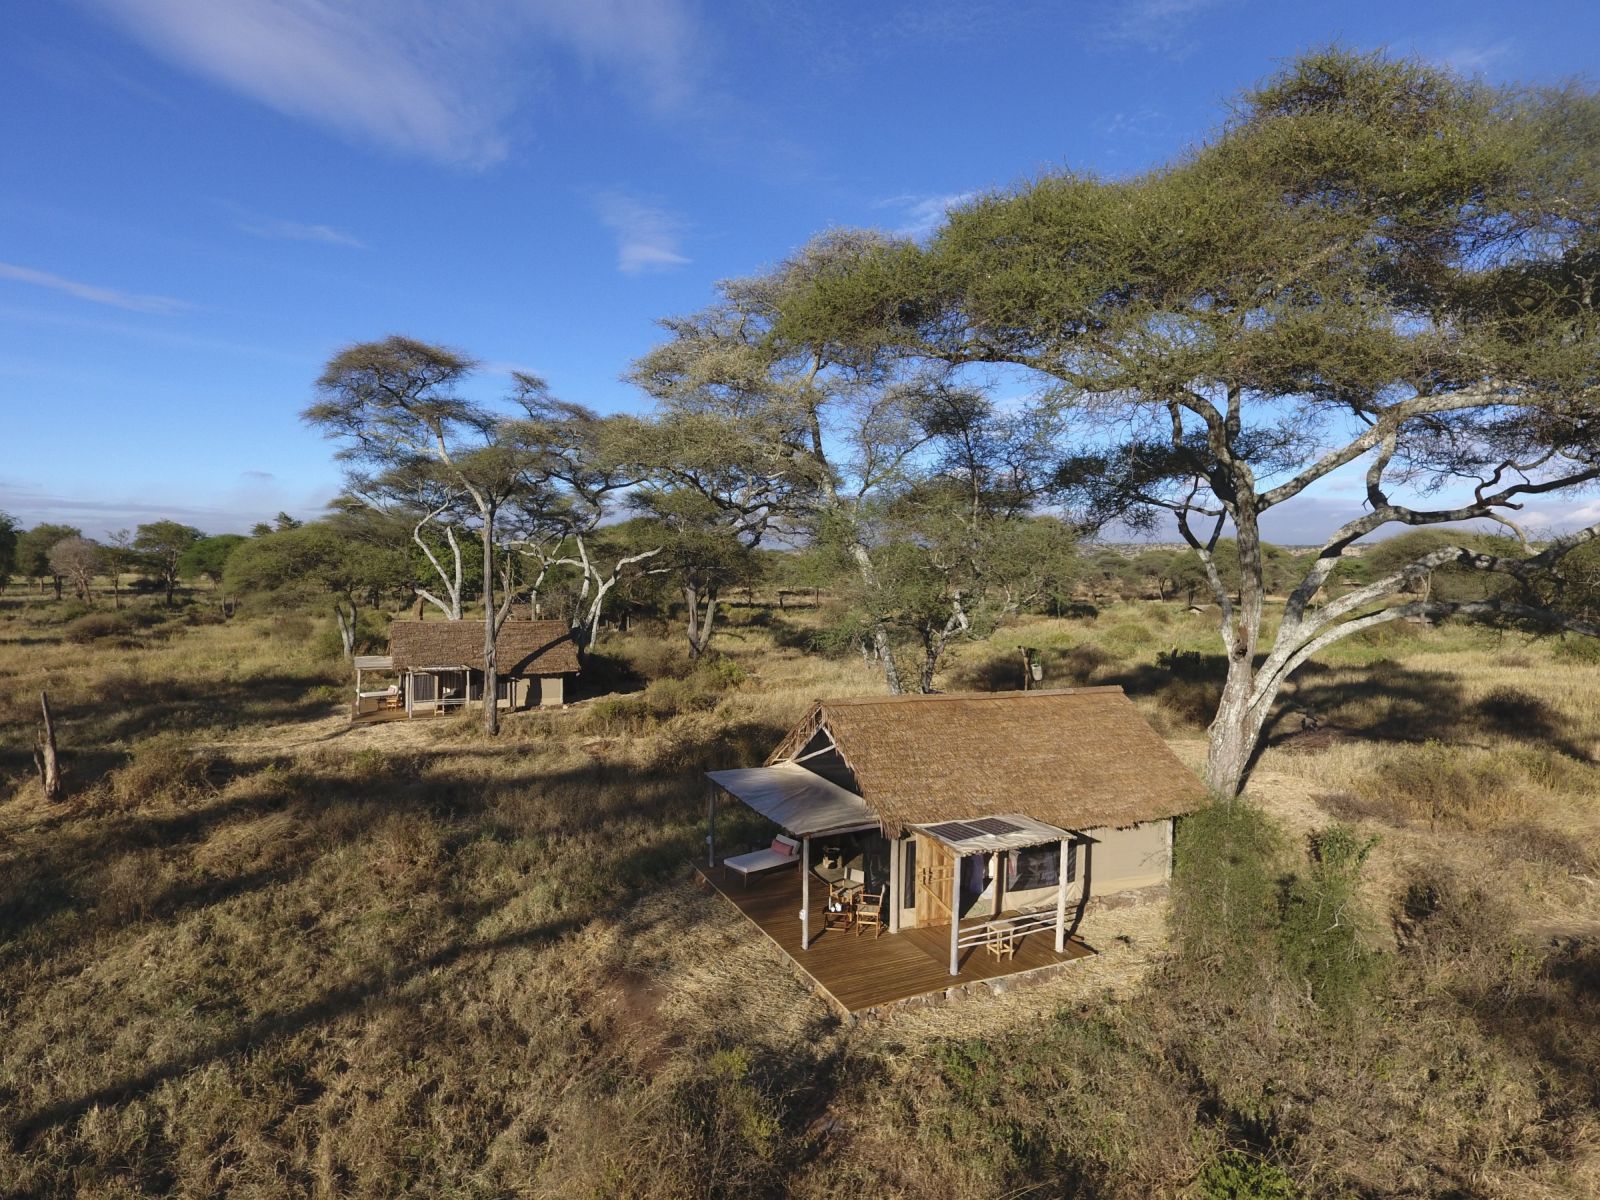 Birds eye view of camp at Kuro Tarangire in Tanzania 